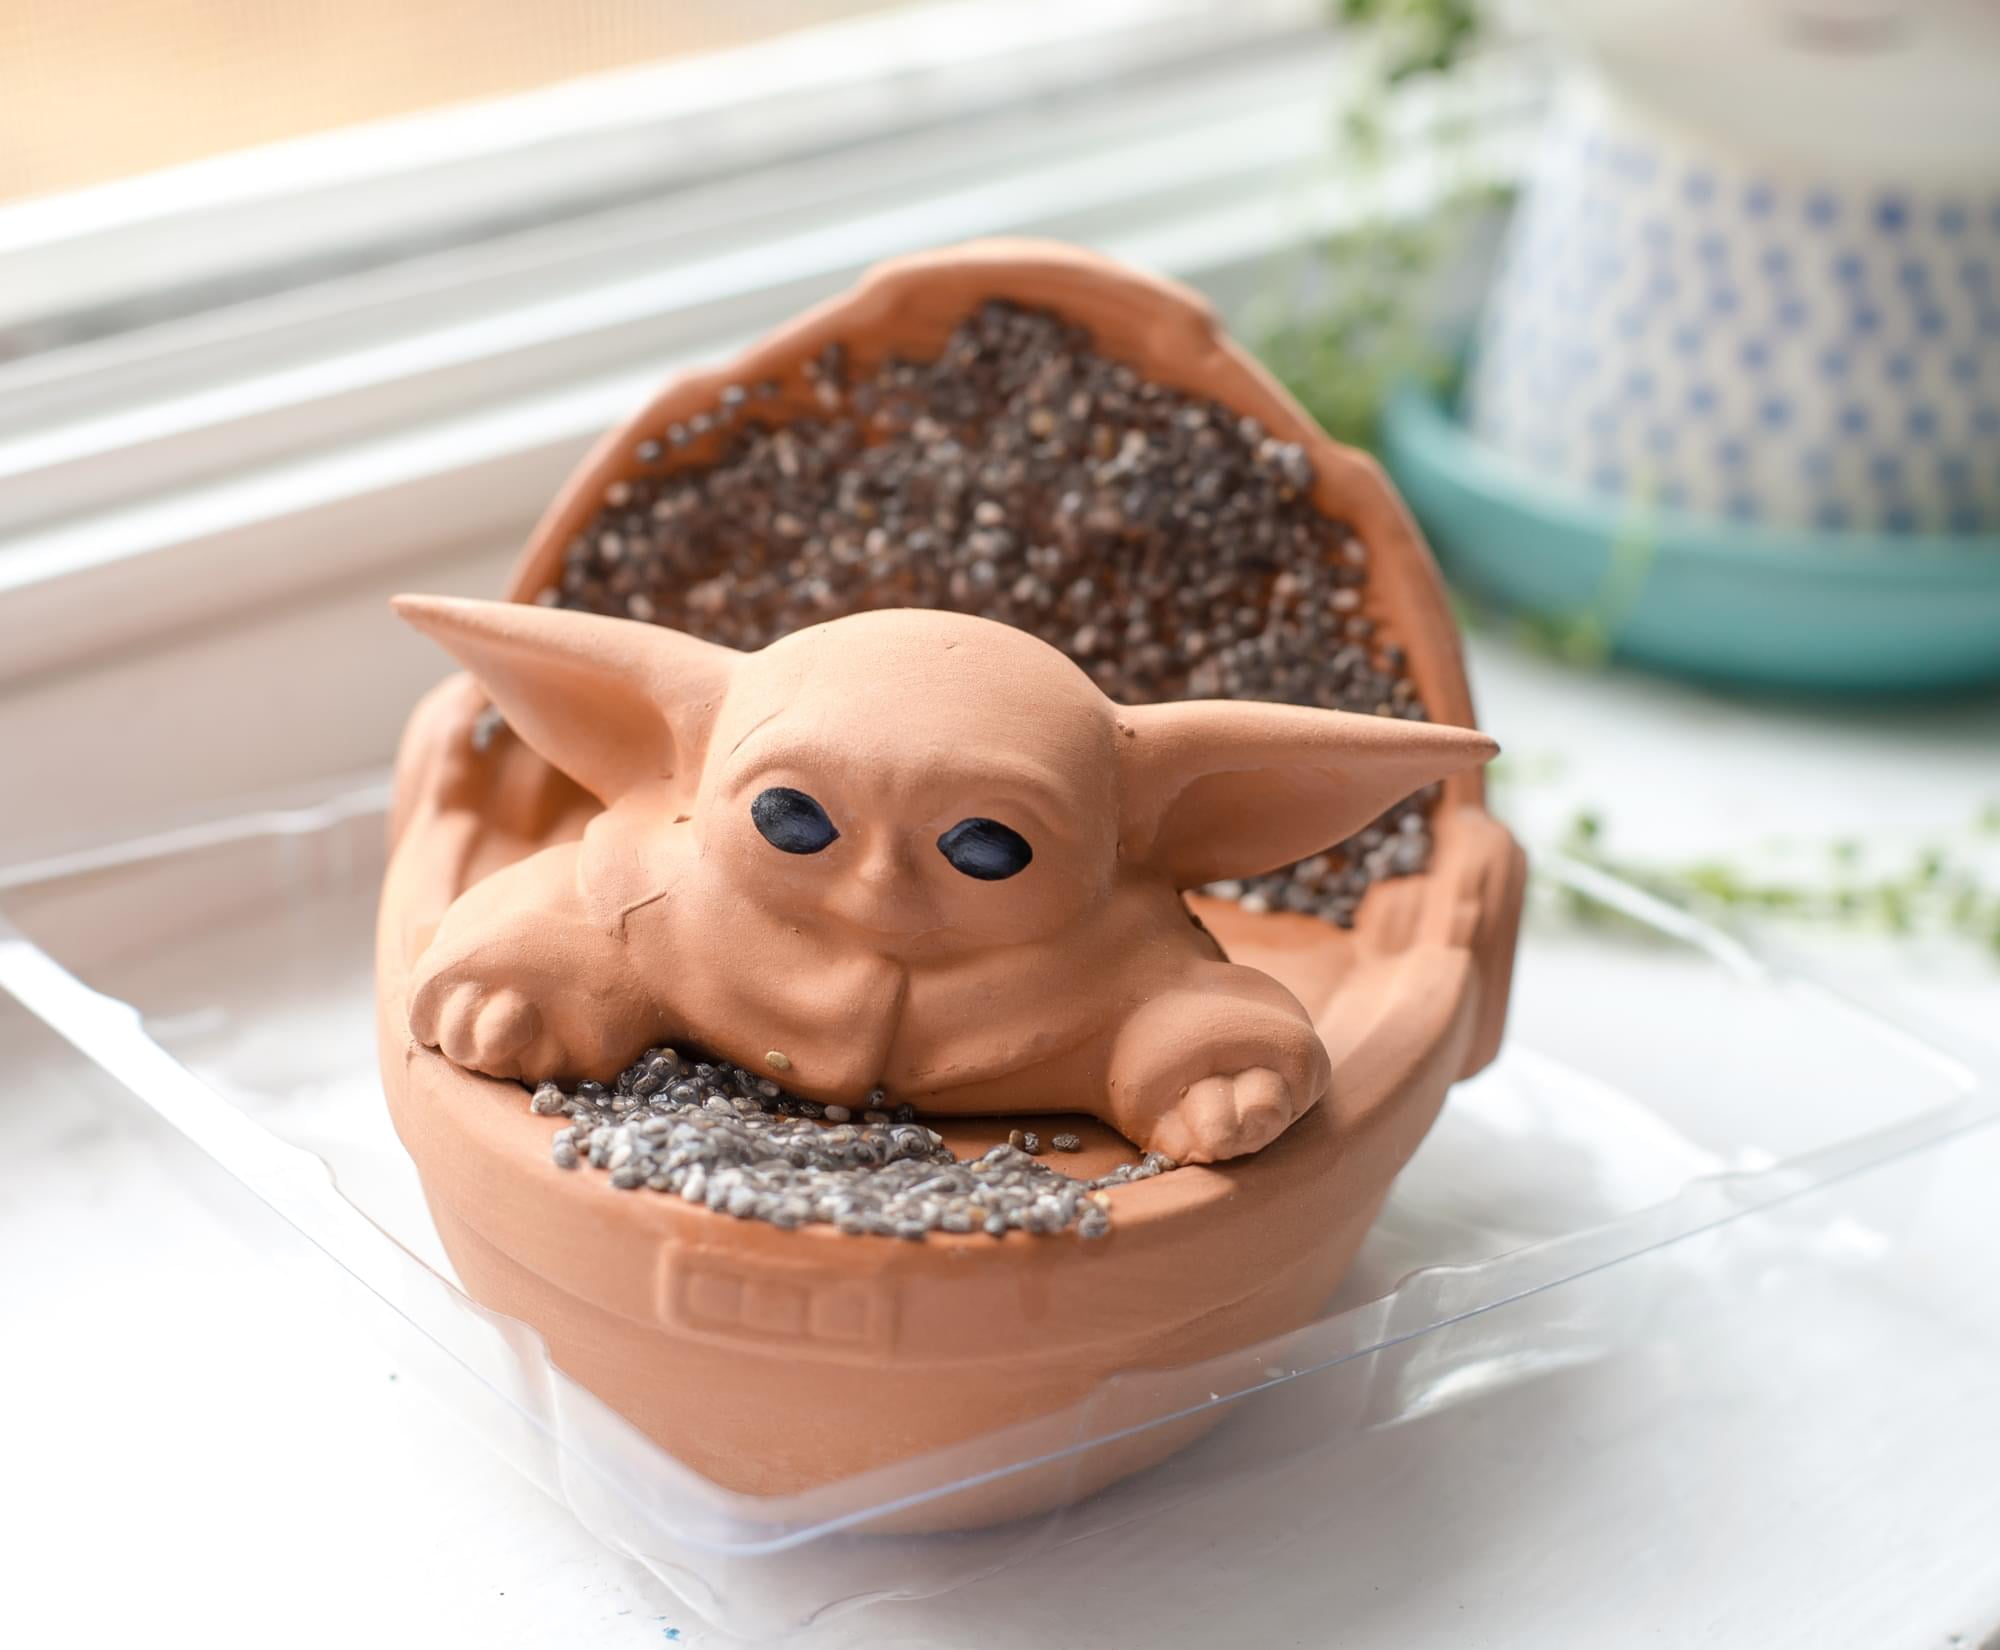 Chia -Pet Planter Decorat Pottery Sunlight Fast-Growing Seed Pack- Star  Wars Yoda the Child- Orange 